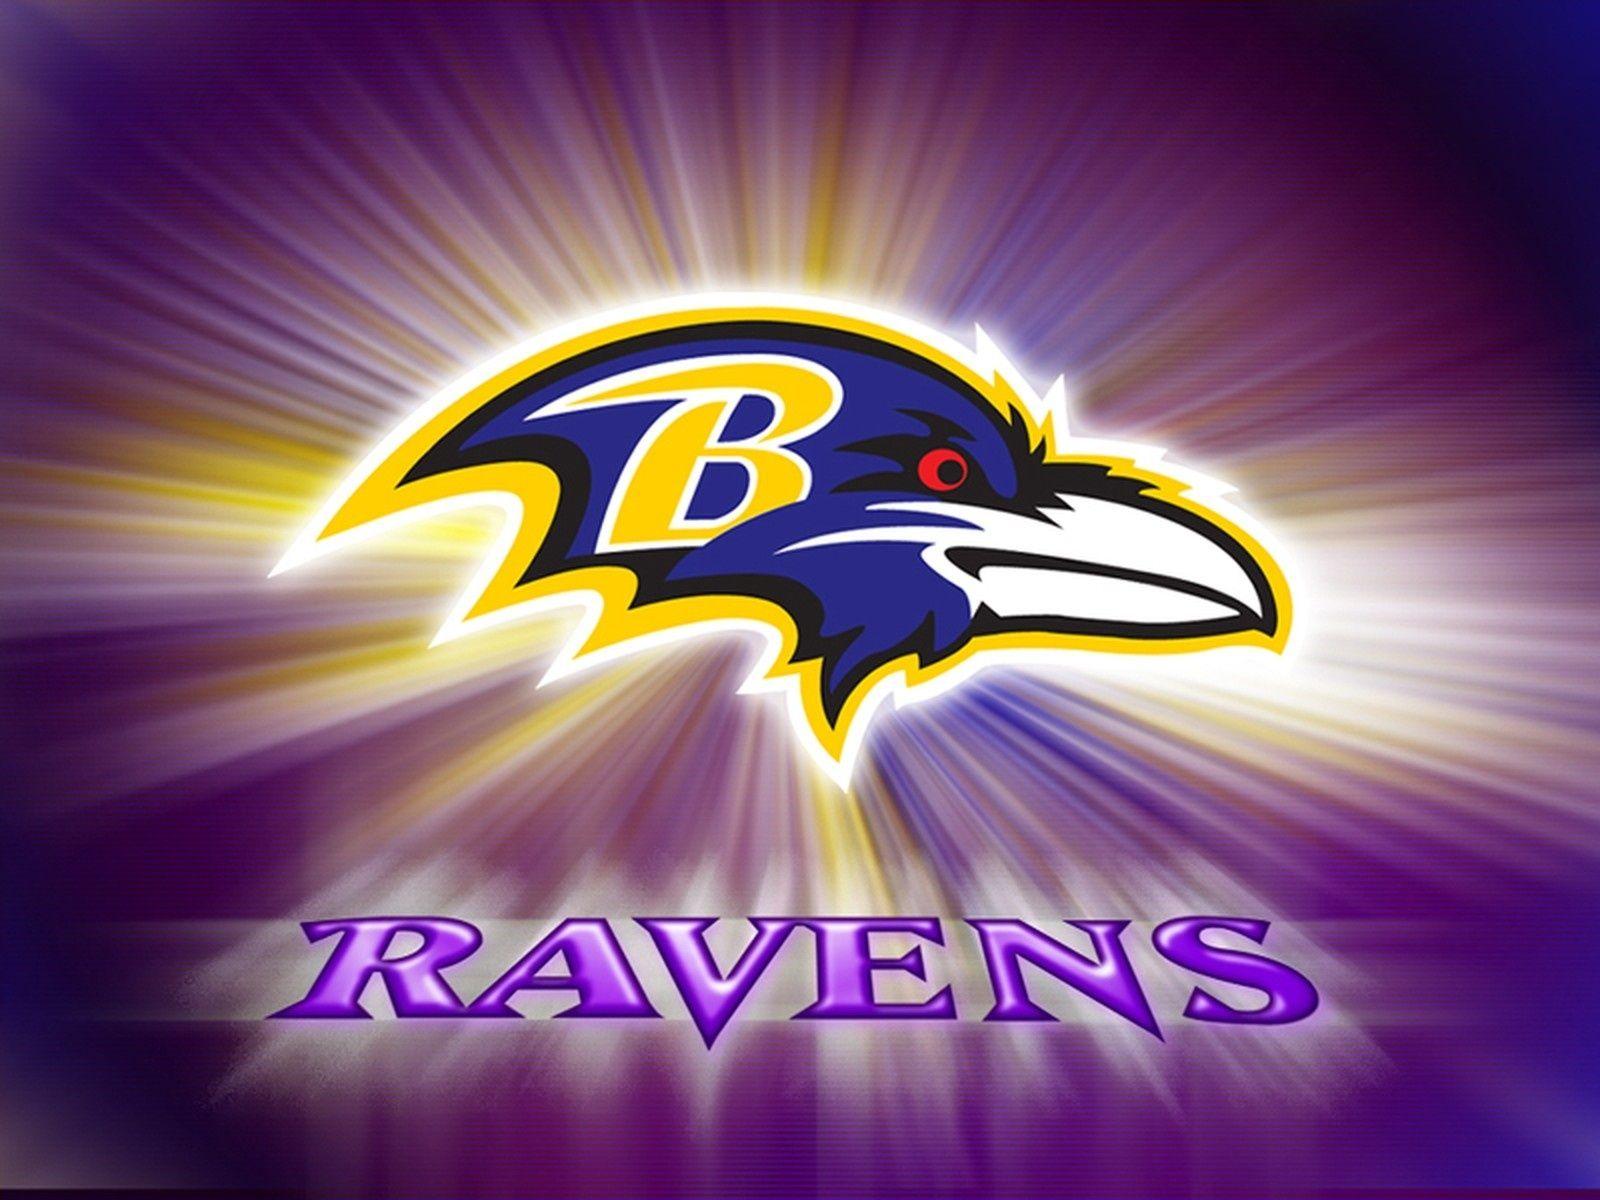 Baltimore Ravens wallpaper HD background. Baltimore Ravens wallpaper